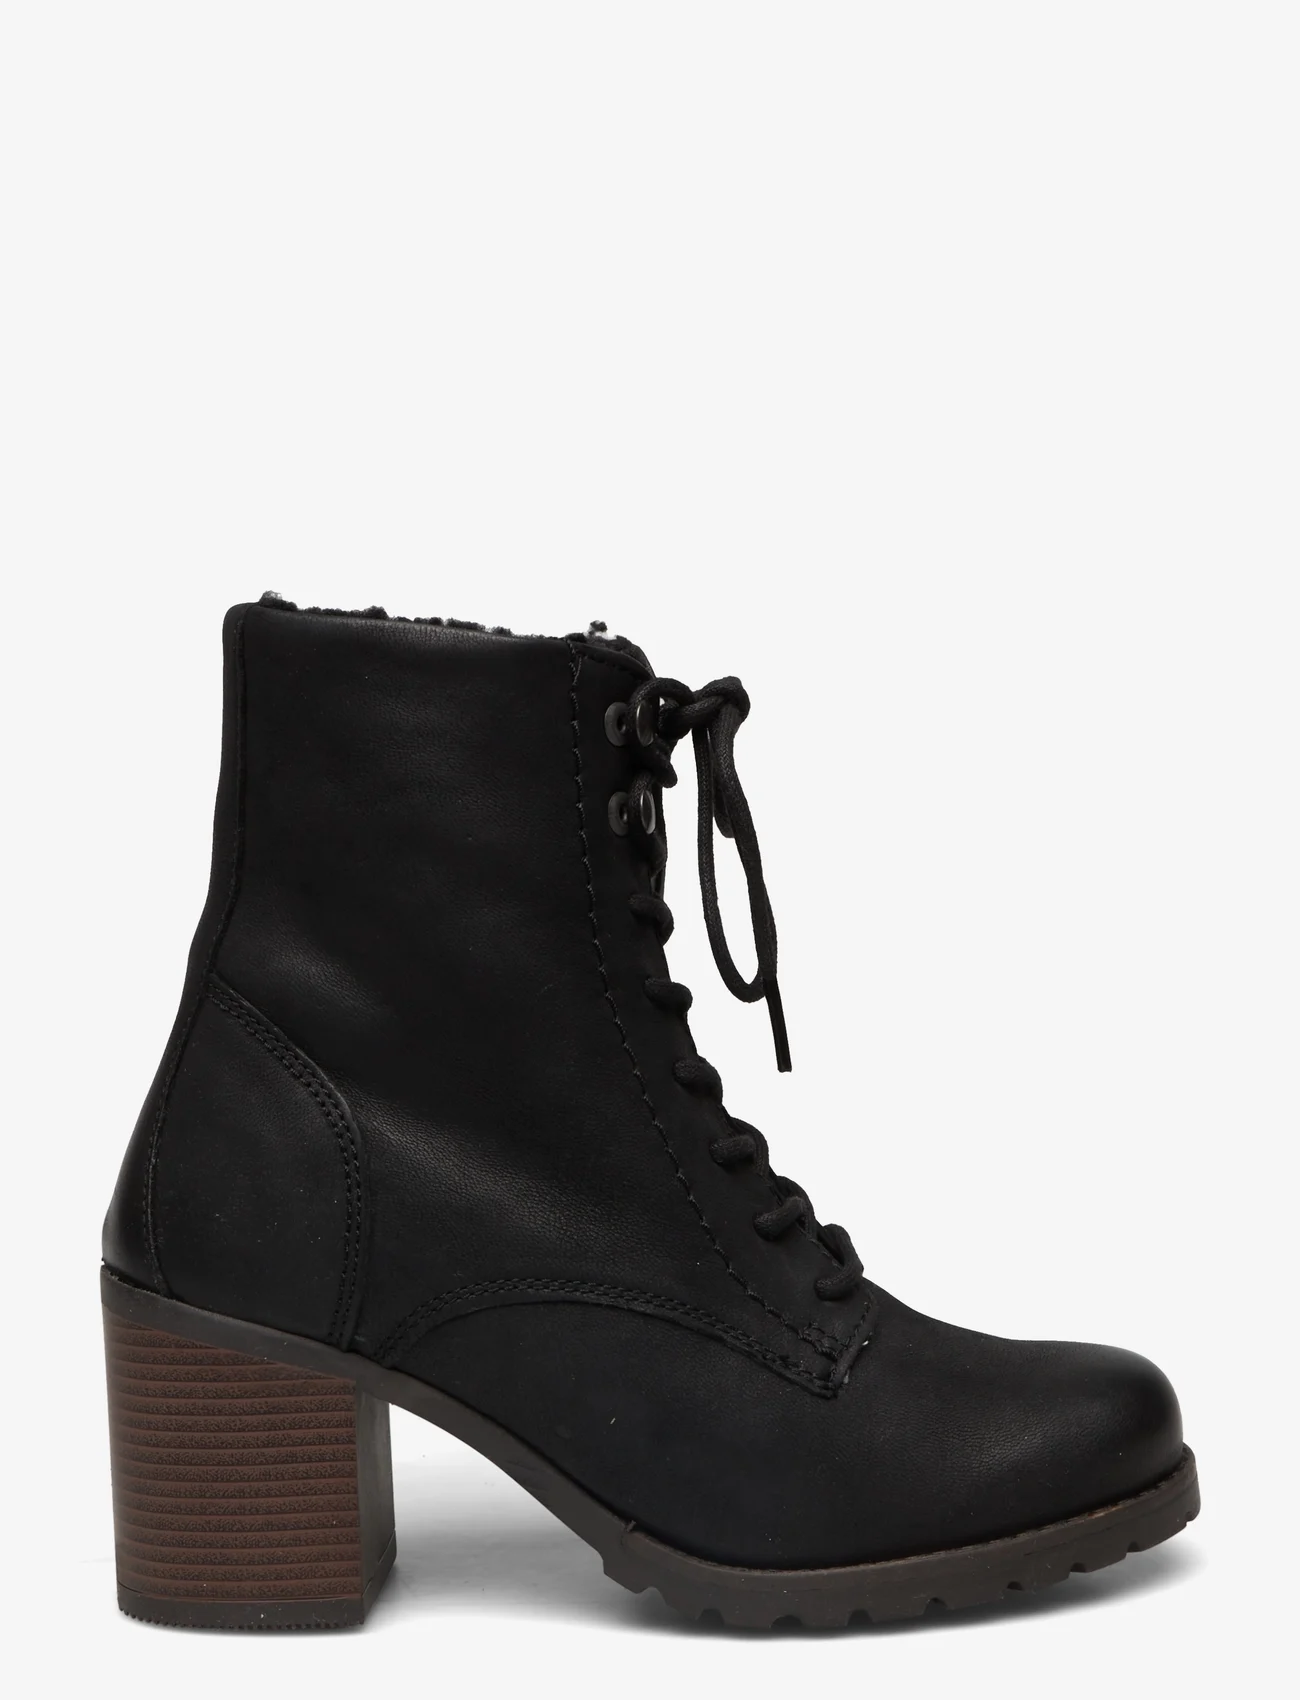 Clarks - Clarkwell Lace - high heel - black wlined lea - 1